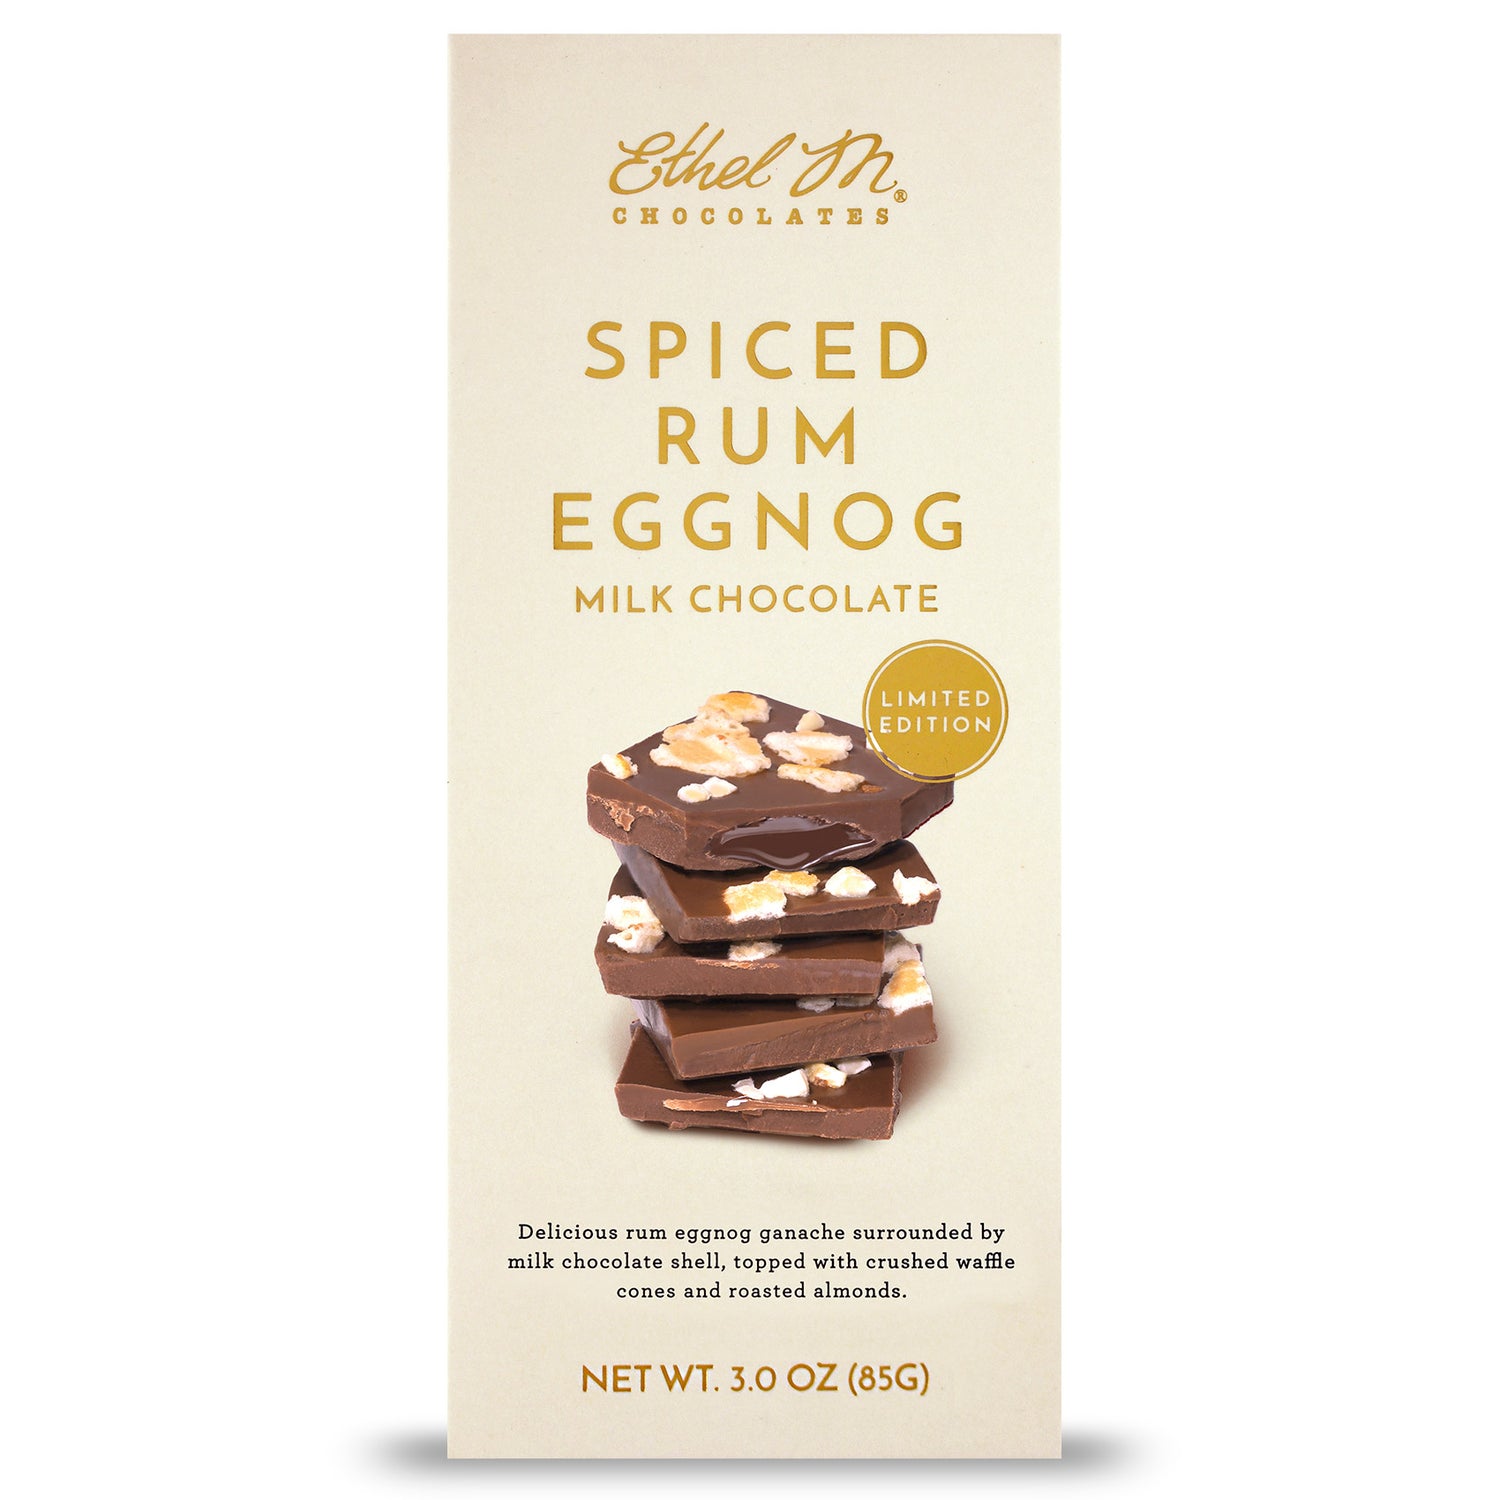 Ethel M Chocolates Spiced Rum Eggnog Milk Chocolate Tablet Bar